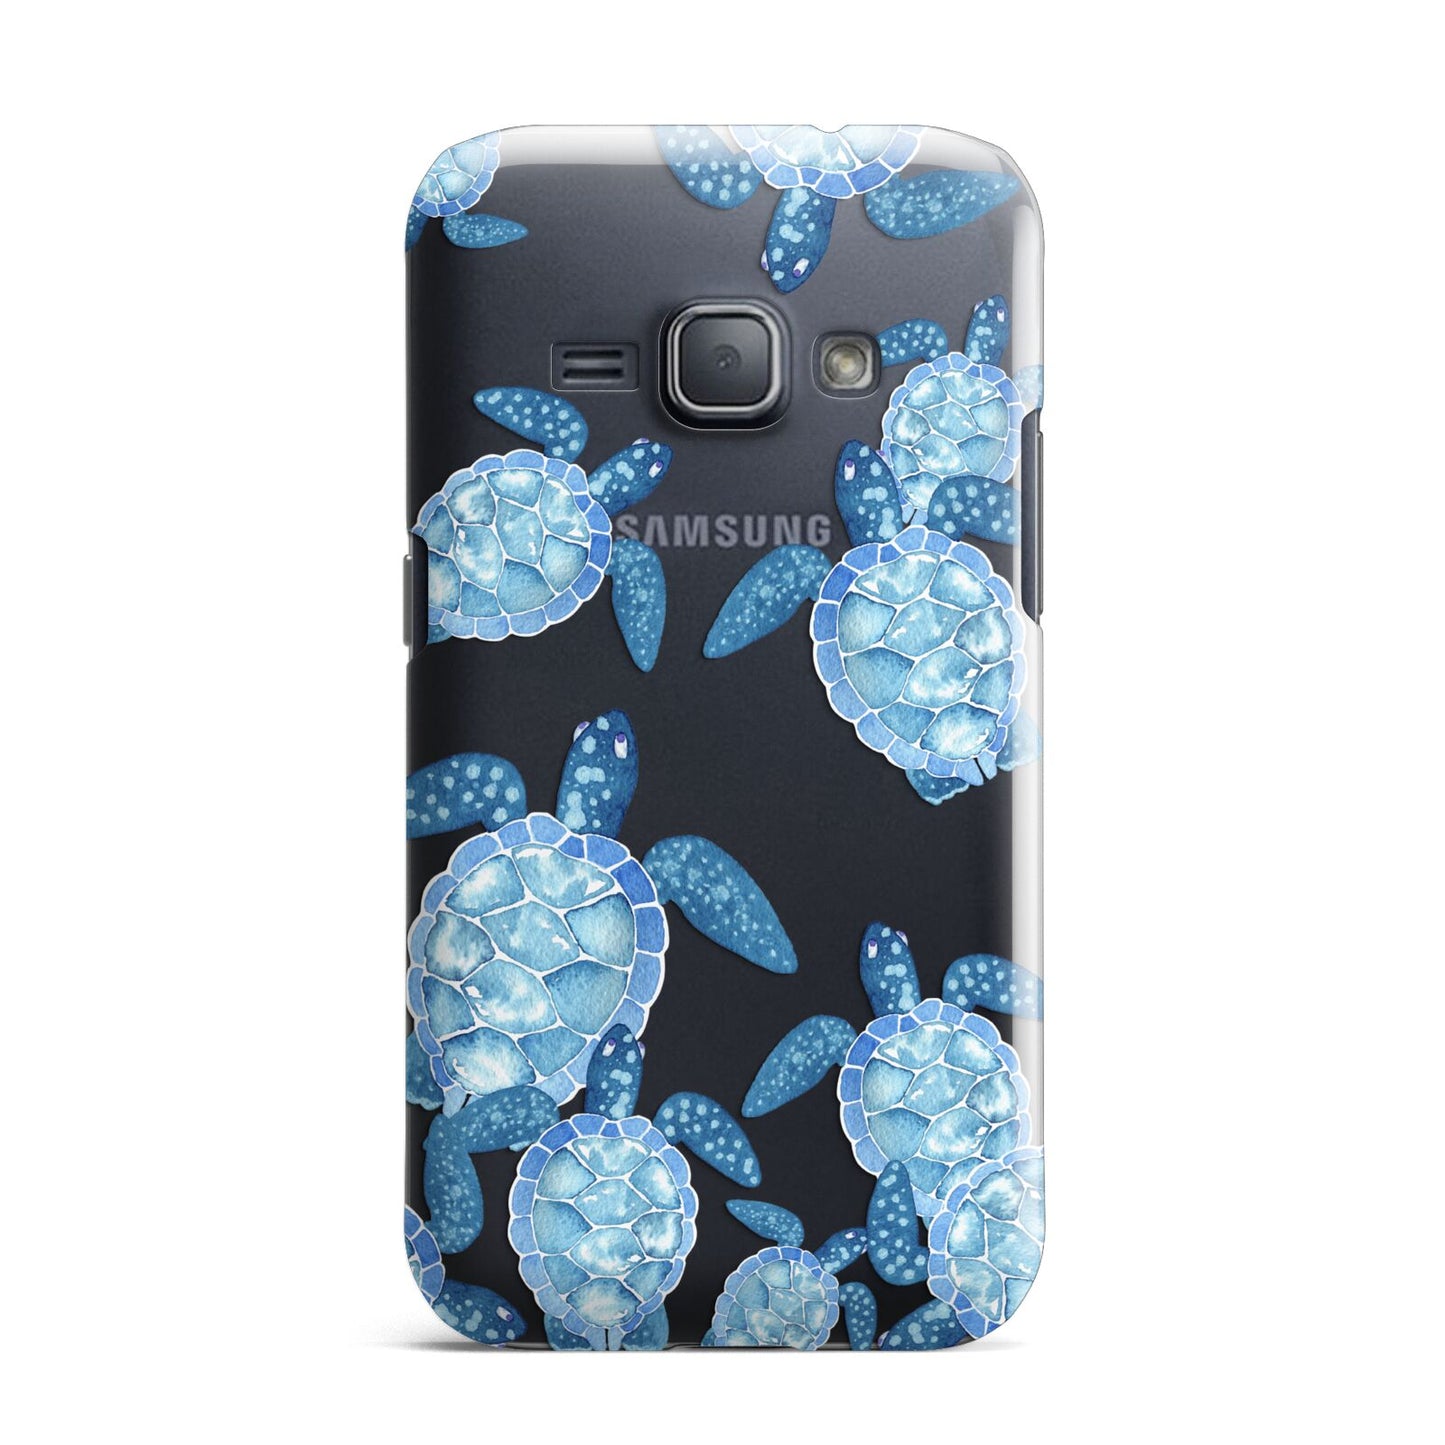 Turtle Samsung Galaxy J1 2016 Case